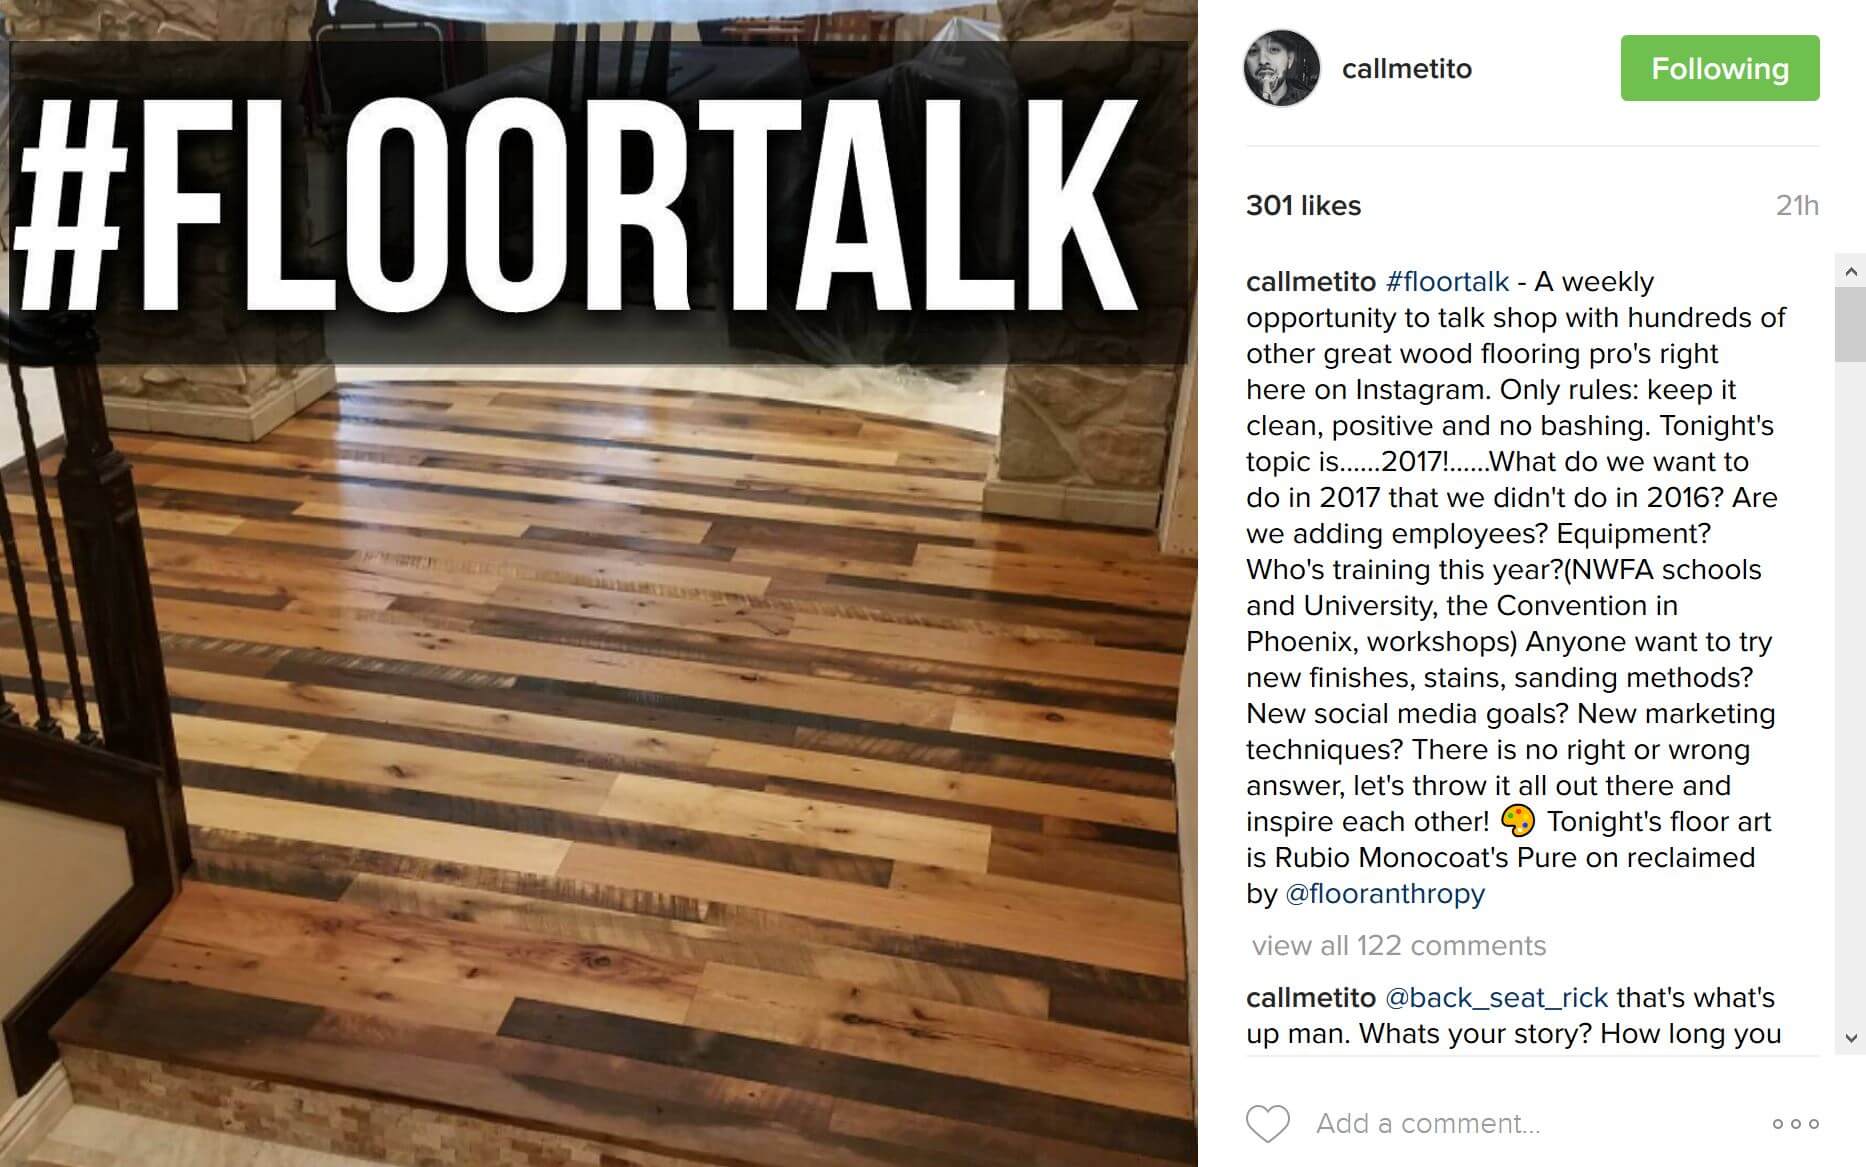 Jorge Boror (@callmetito) started a shop-talk community for wood flooring pros on Instagram